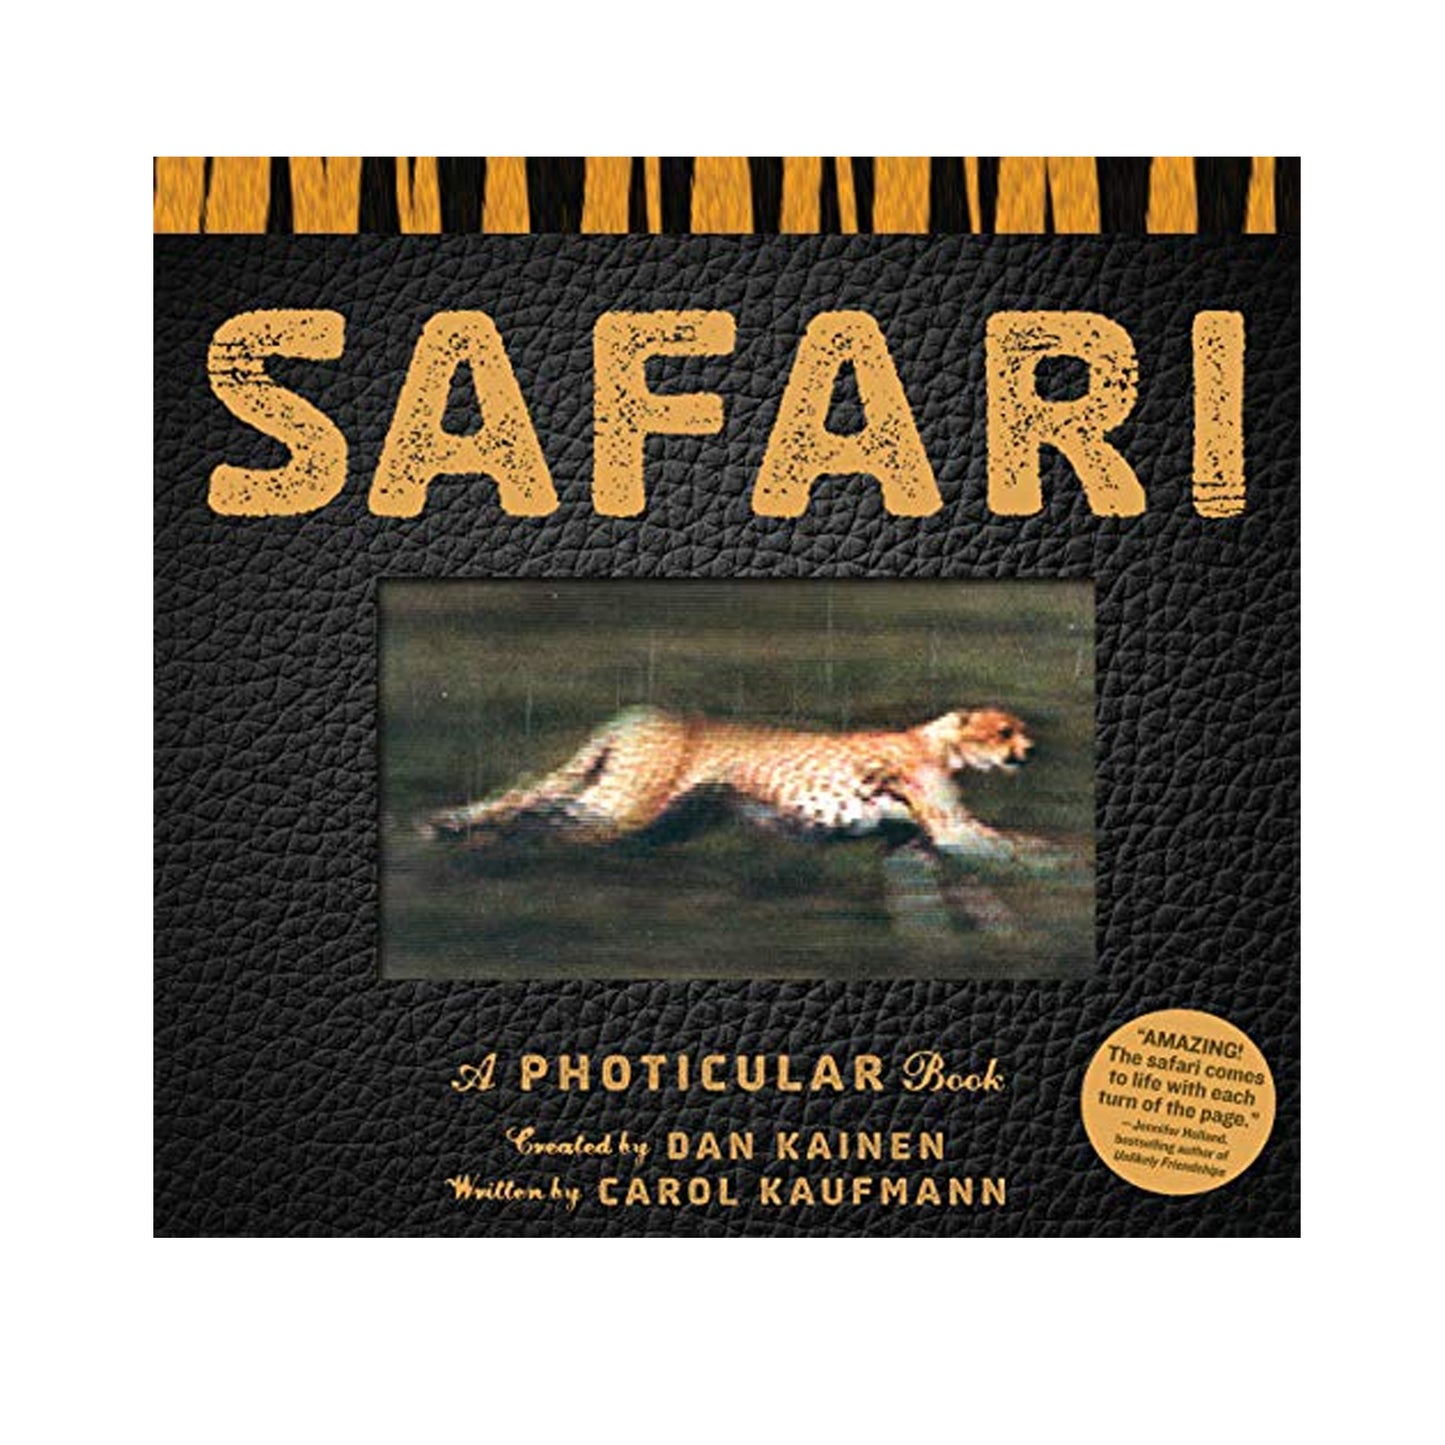 Book - Safari photicular